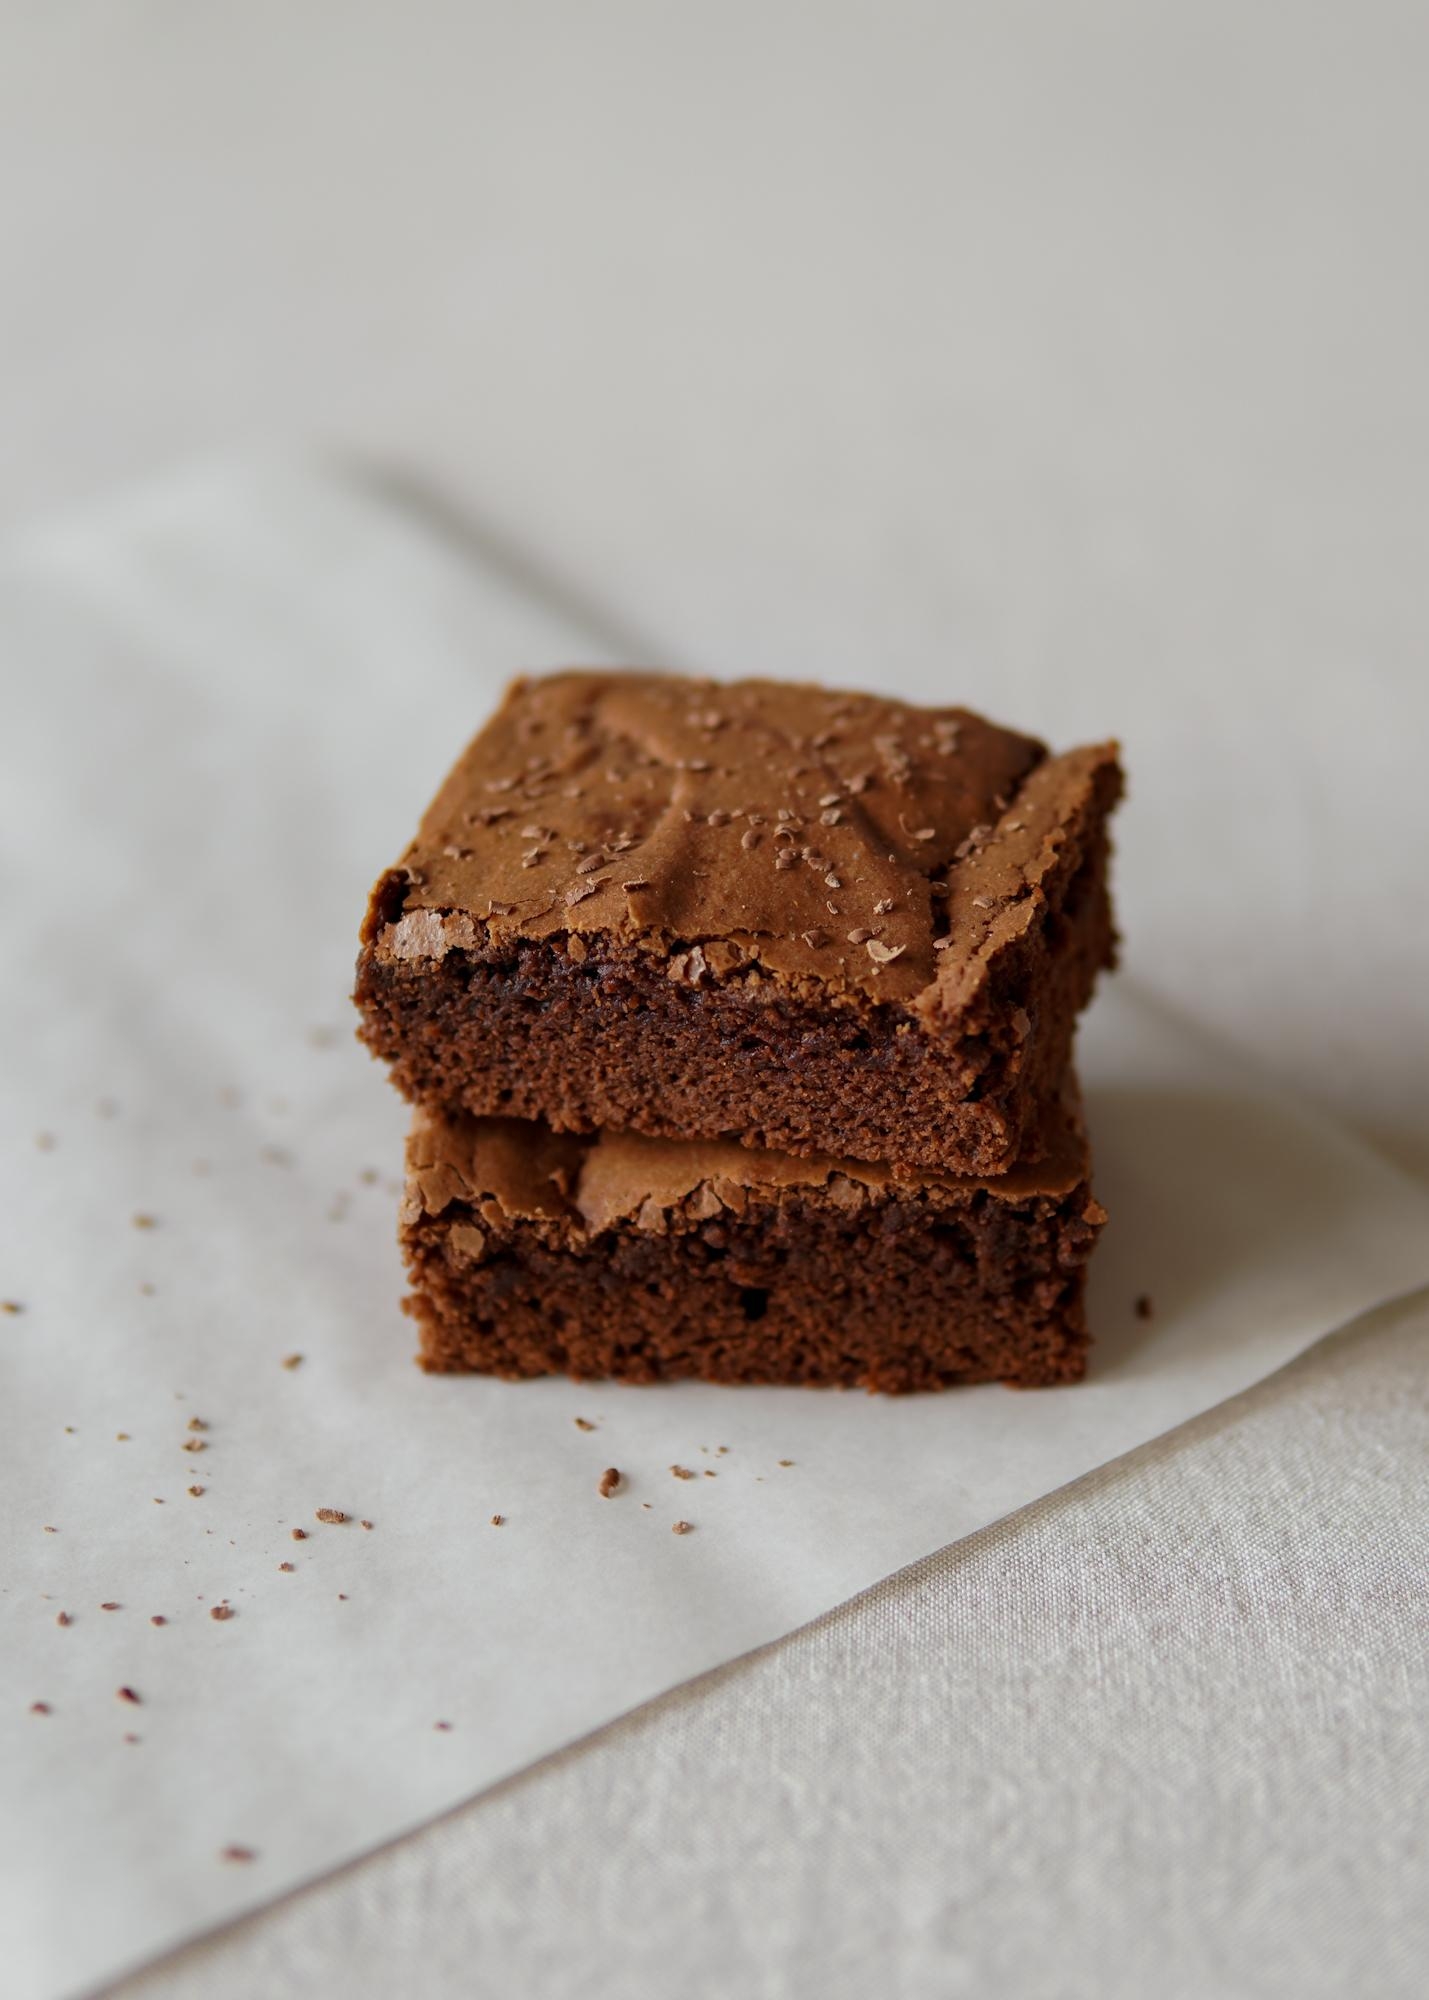 Reel zu den Brownies auf dem Instagram-Account unter „Reels“ abrufbar. #backen #brownies #lecker